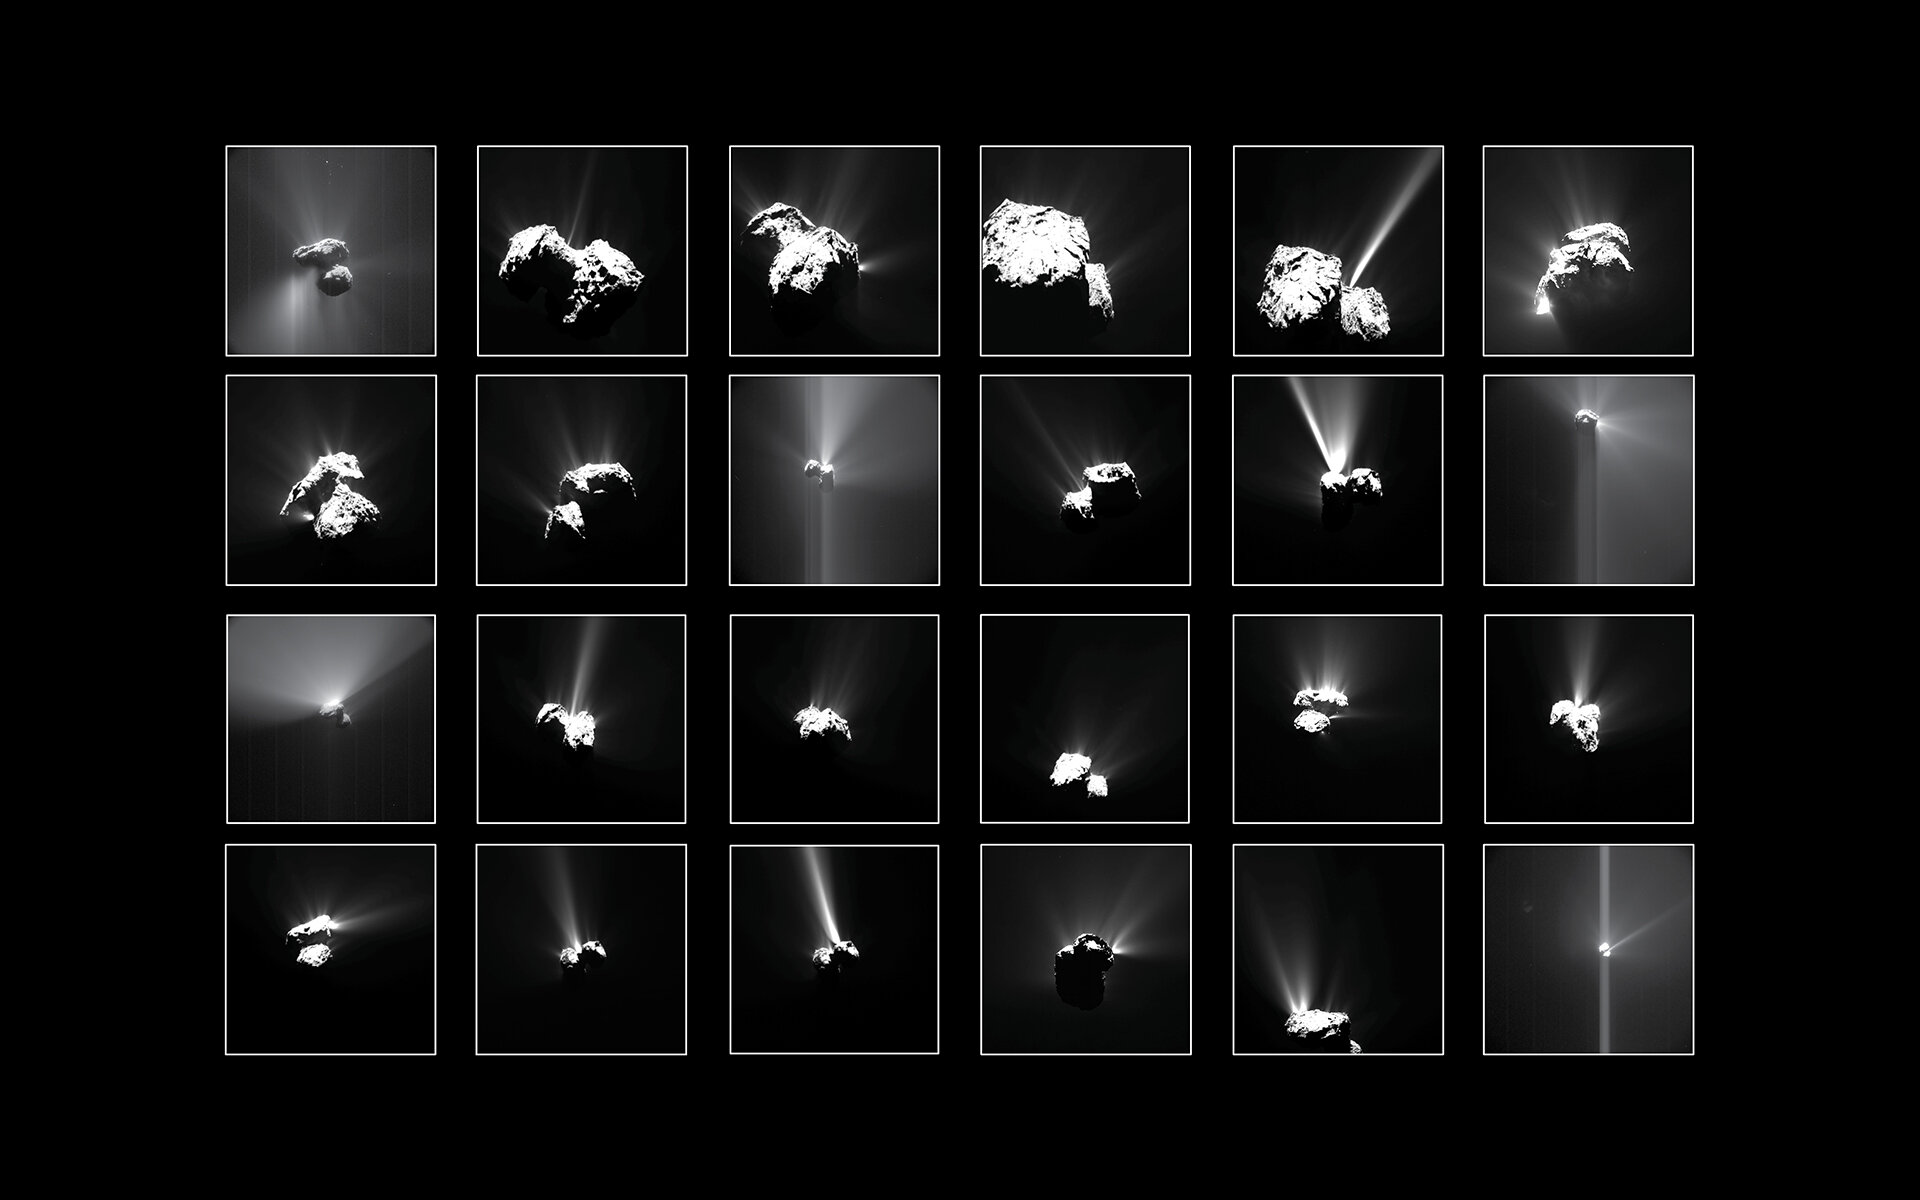 Rosetta has taken many incredible photos of Comet 67P/Churyumov-Gerasimenko